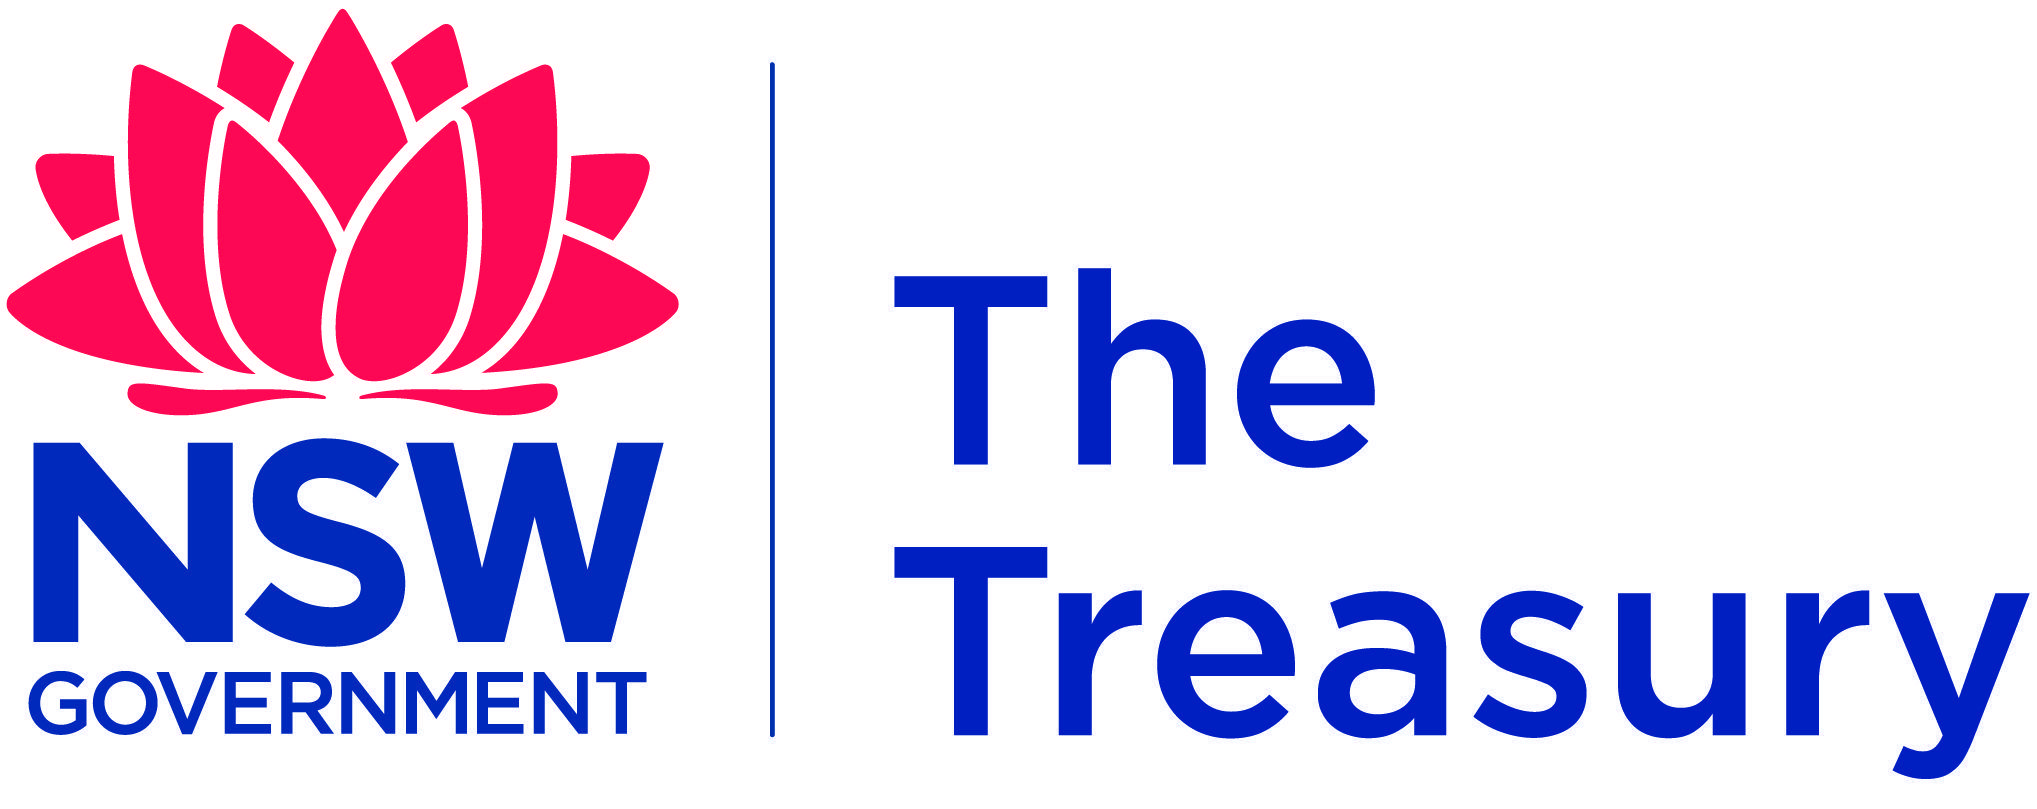 Treasury Logo - Logo-Treasury-2-Tone_high-res-3.jpg - Konnect Learning